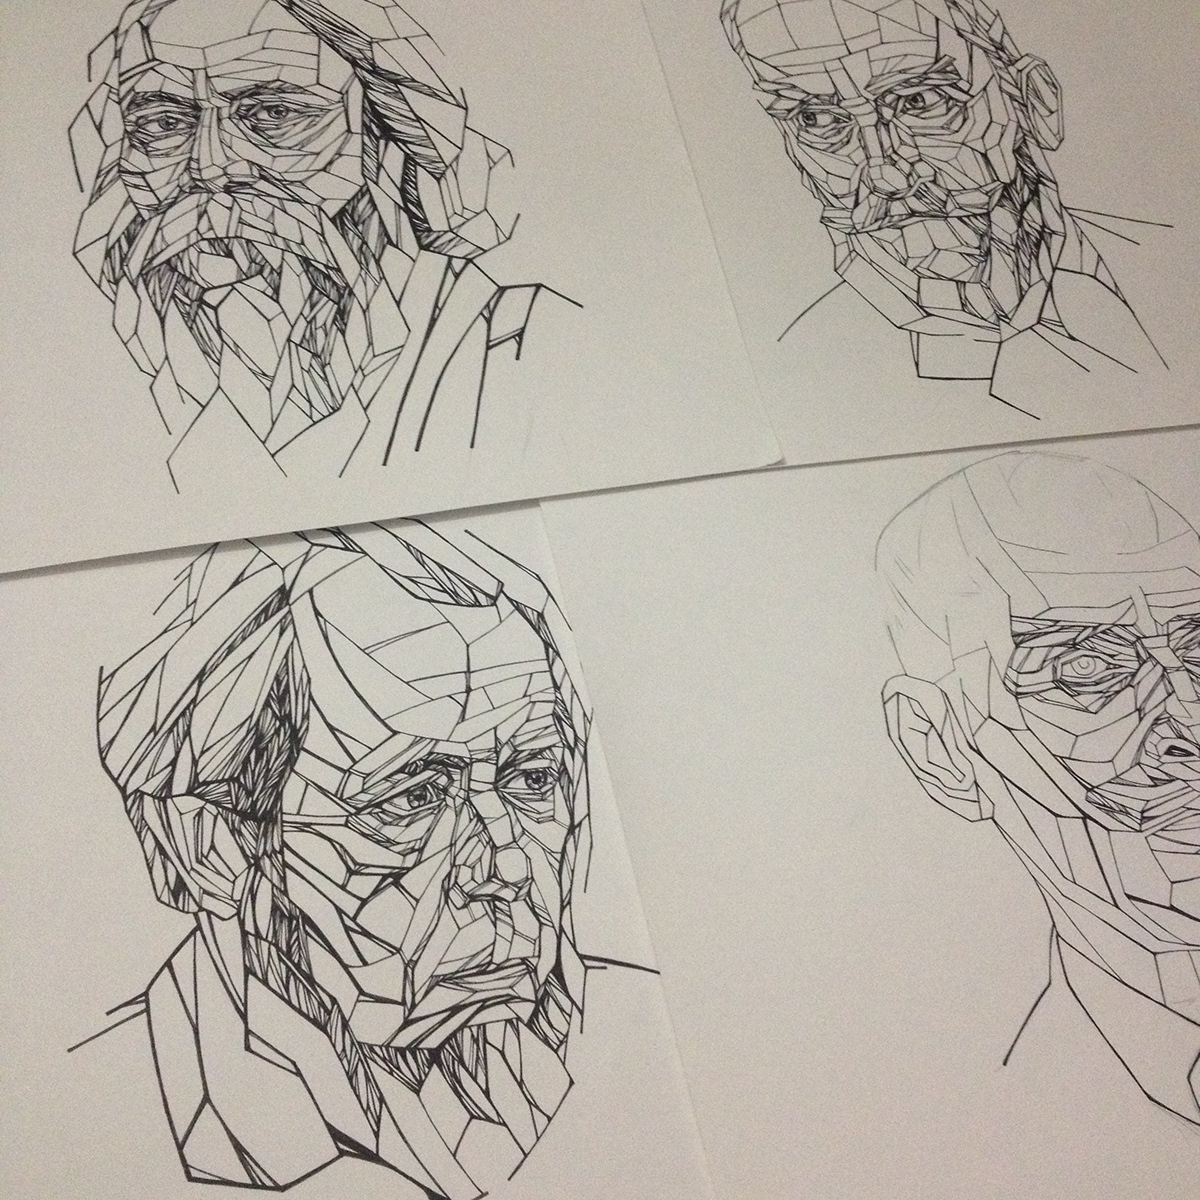 writers Nobel Prize literature graphic art pencil portrayal Illusrator illustrations ink paper